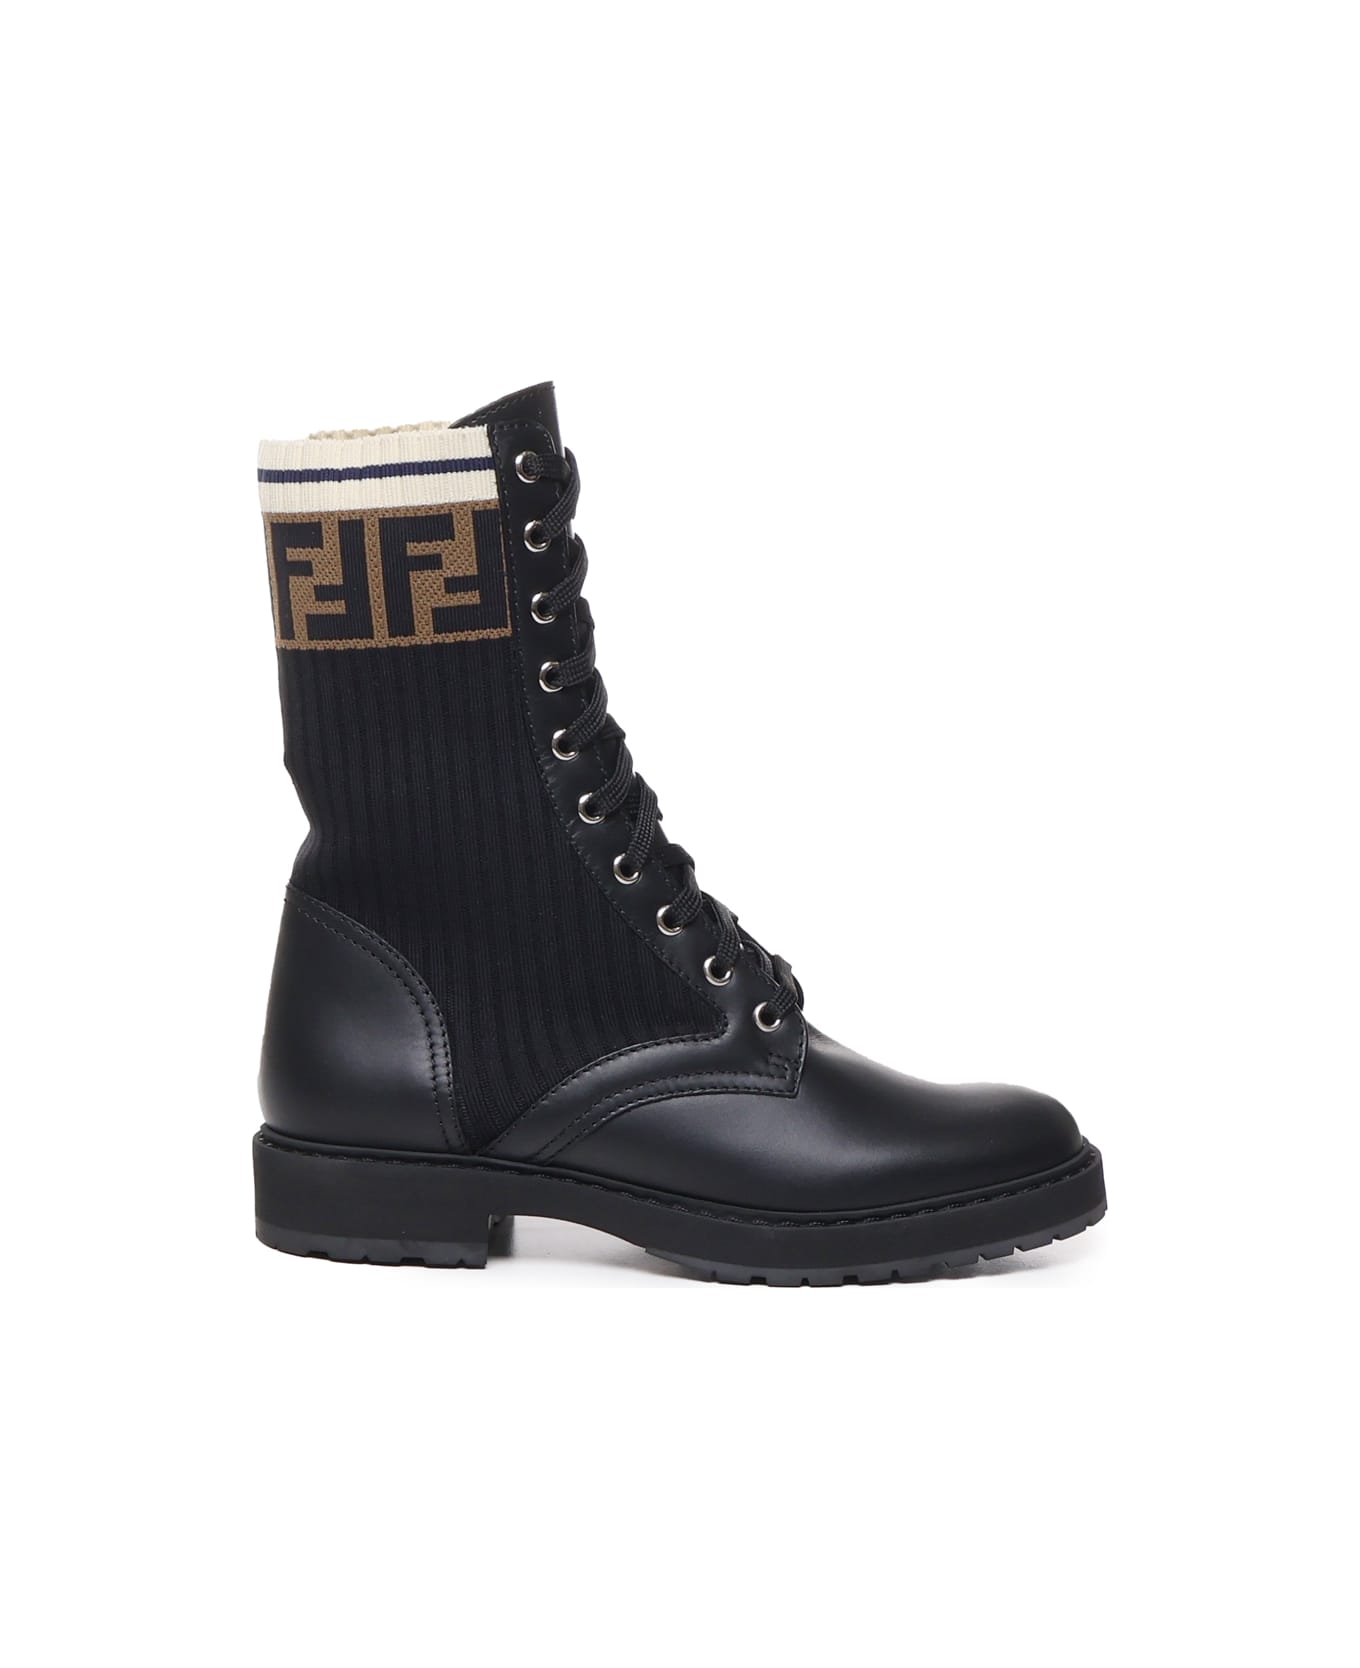 Fendi Leather And Mesh Biker Boots With Ff Monogram - Nero/tab.nero marino